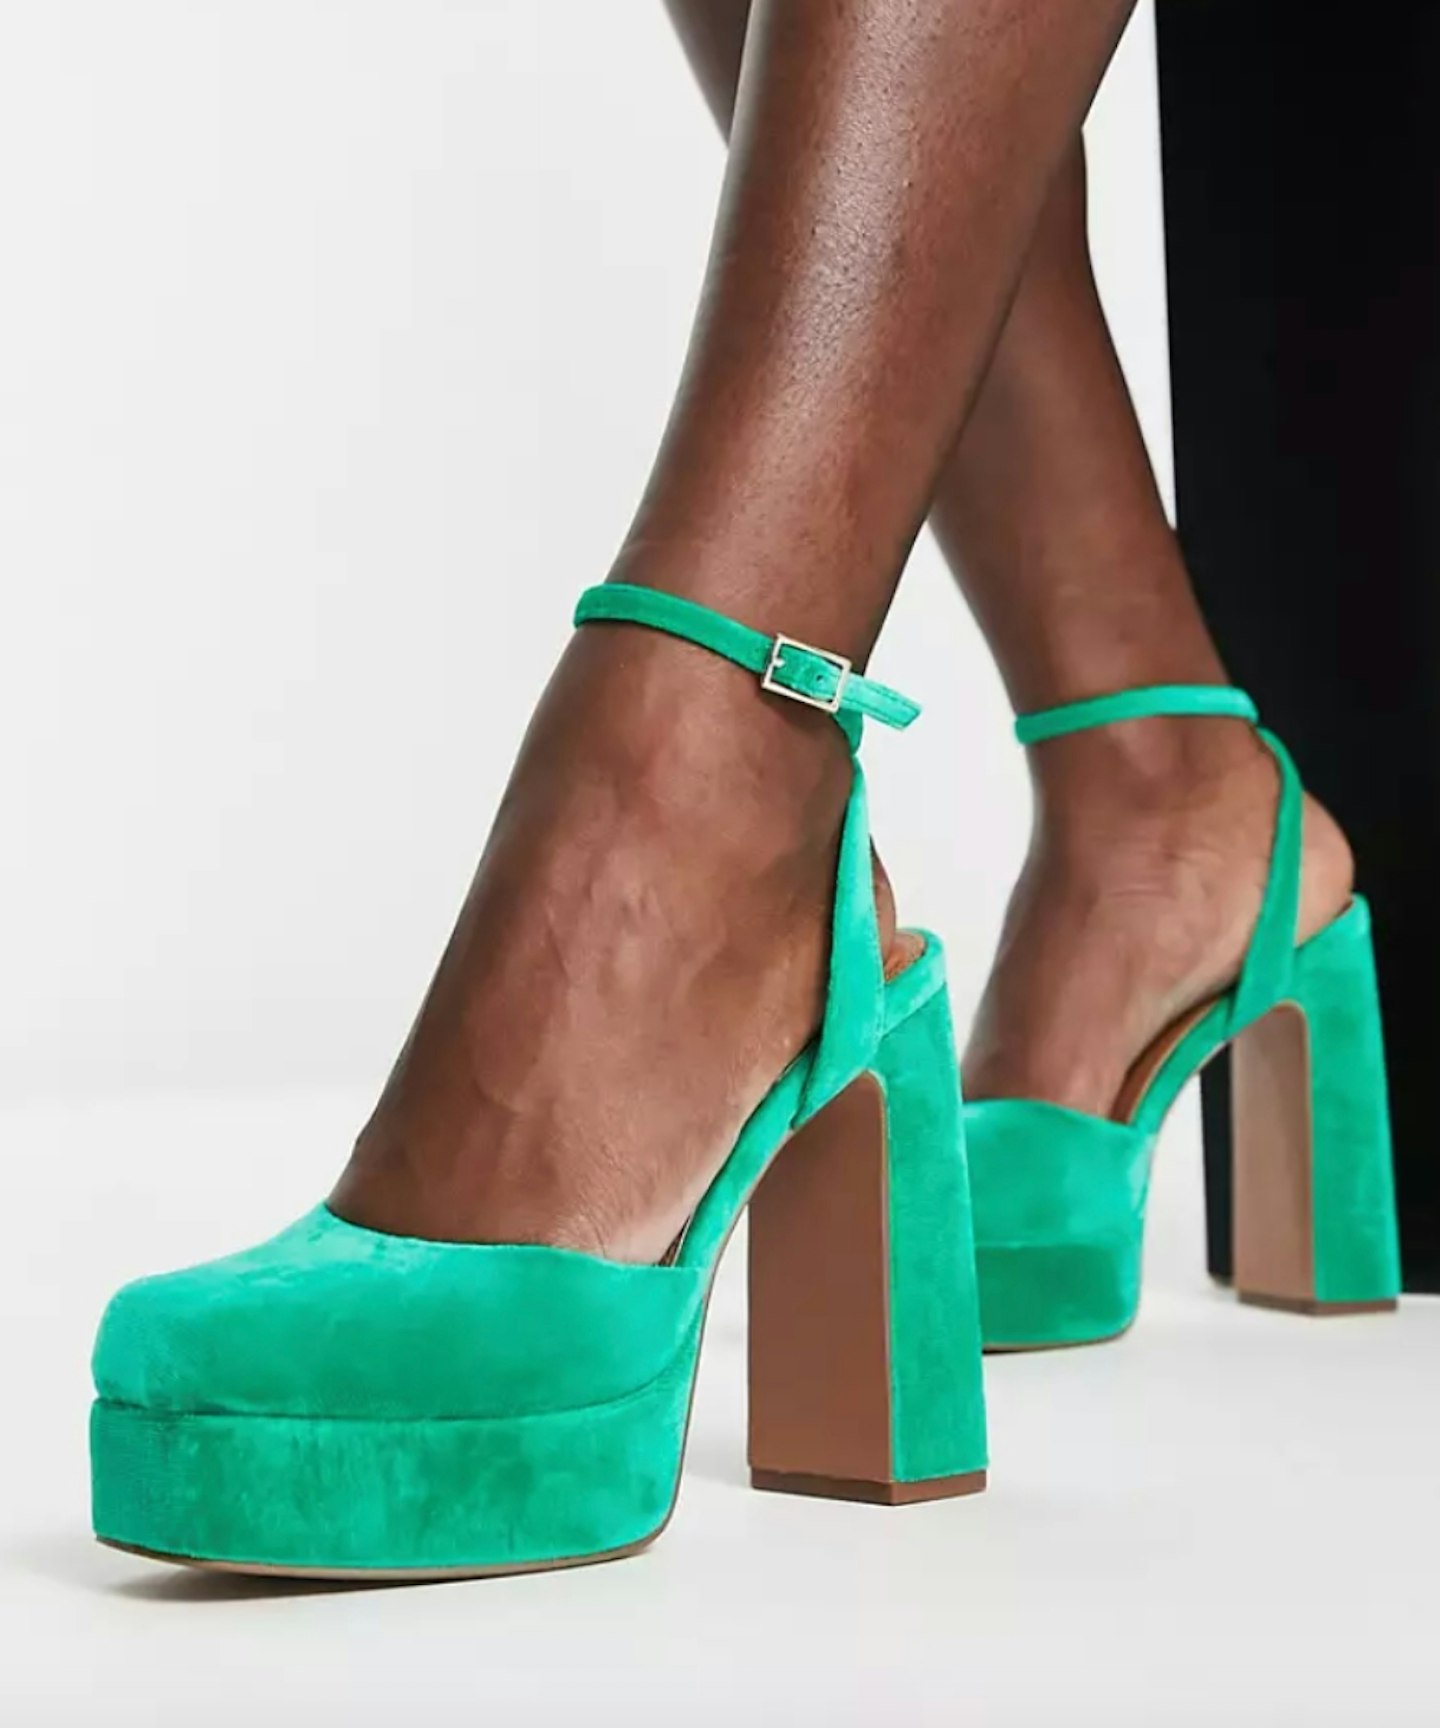 ASOS DESIGN Peaked Platform High Heeled Shoes in Green